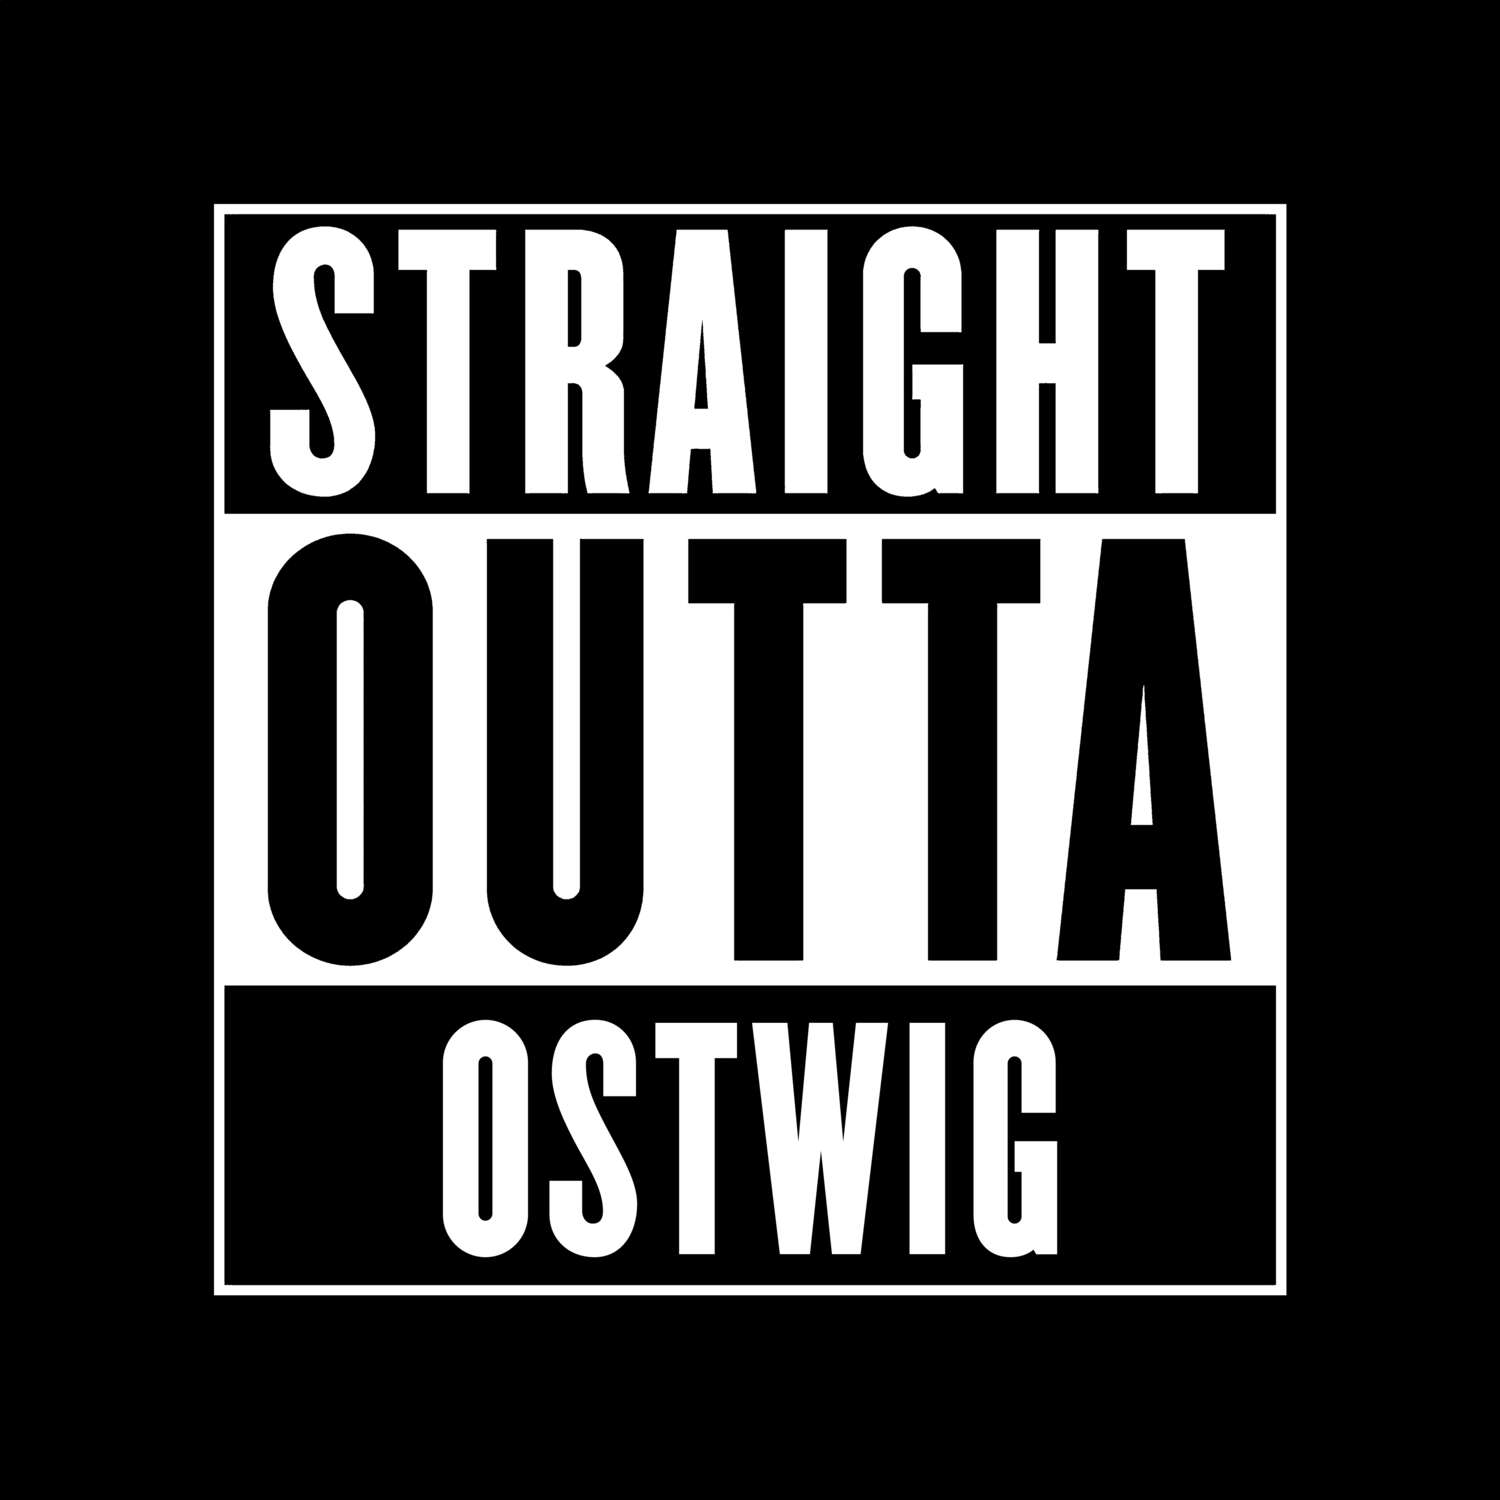 Ostwig T-Shirt »Straight Outta«